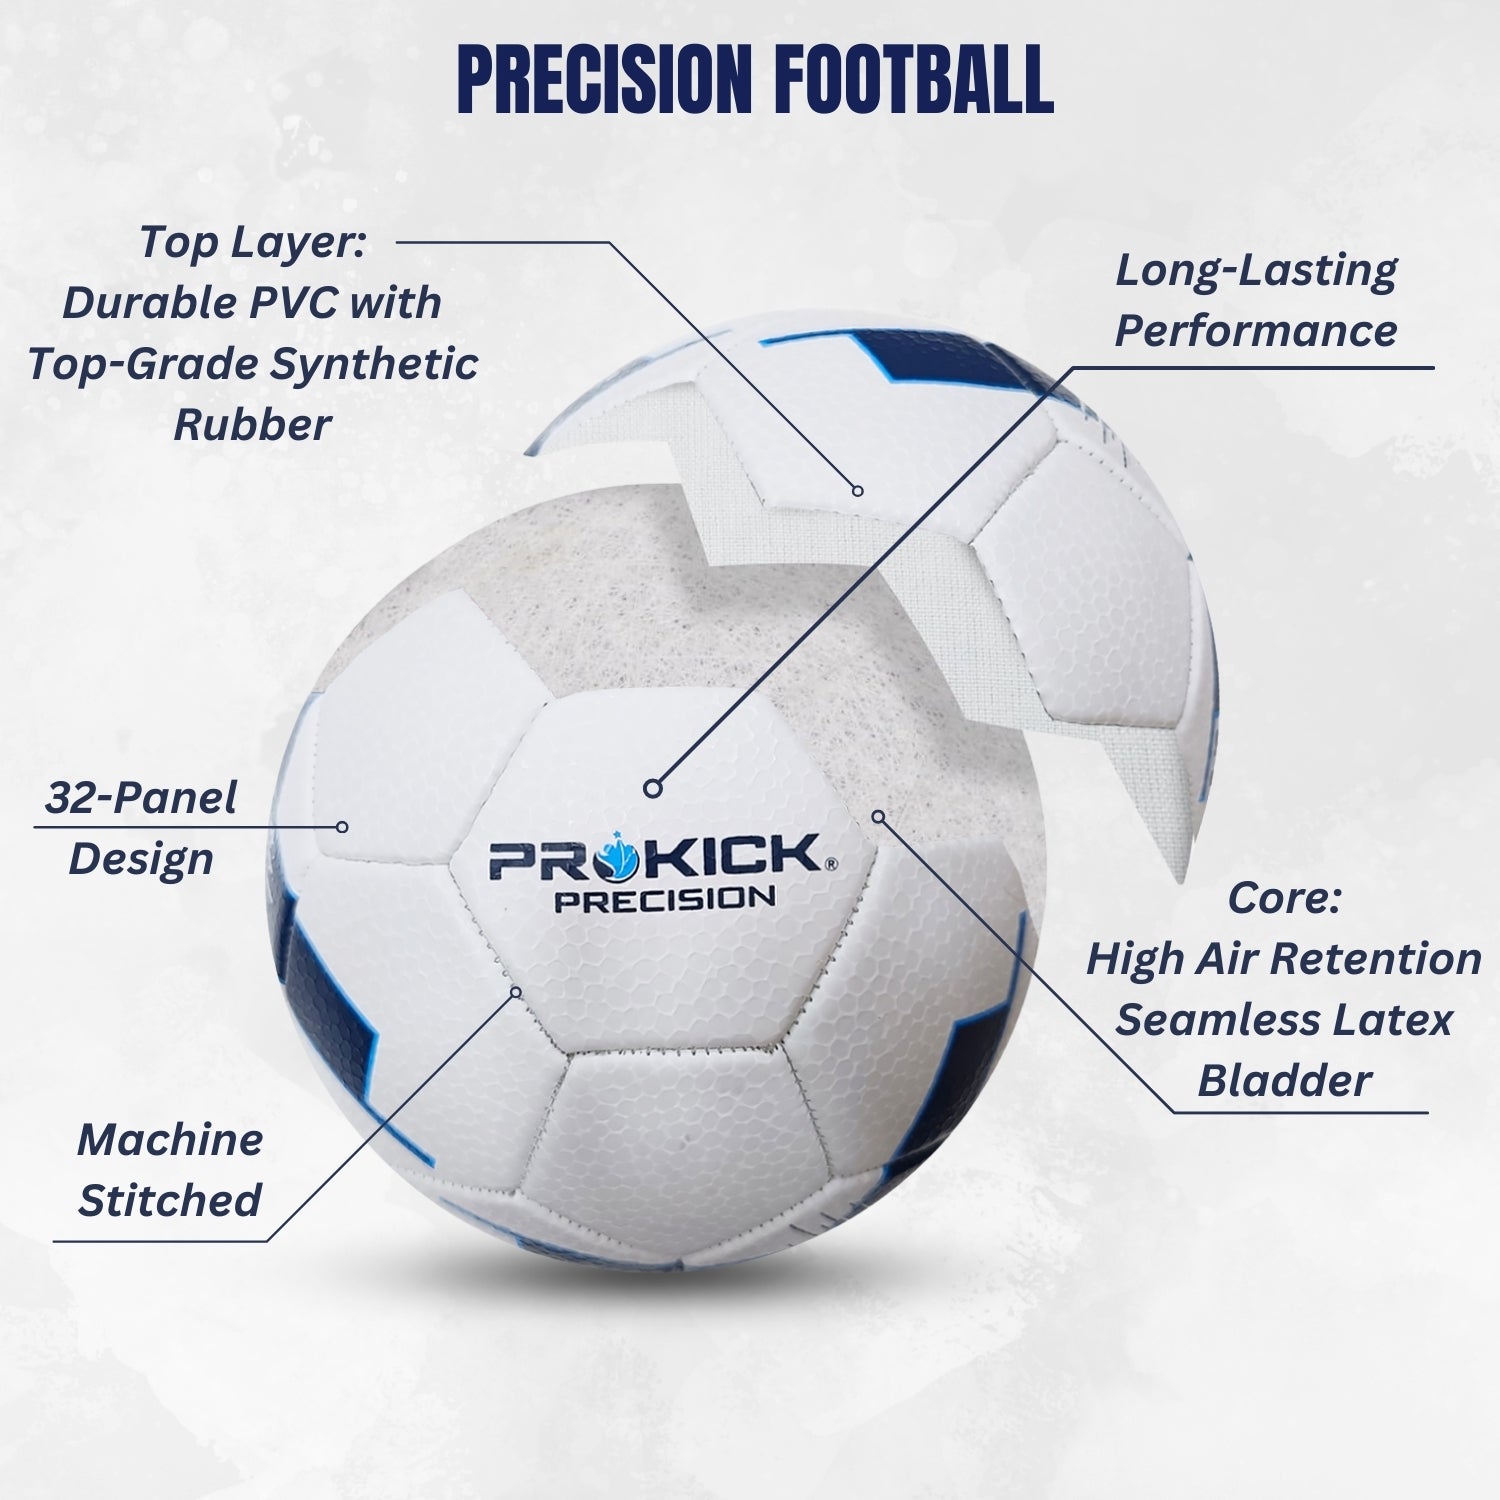 Prokick Precision Machine Stitched 32 Panel Footballs - Best Price online Prokicksports.com